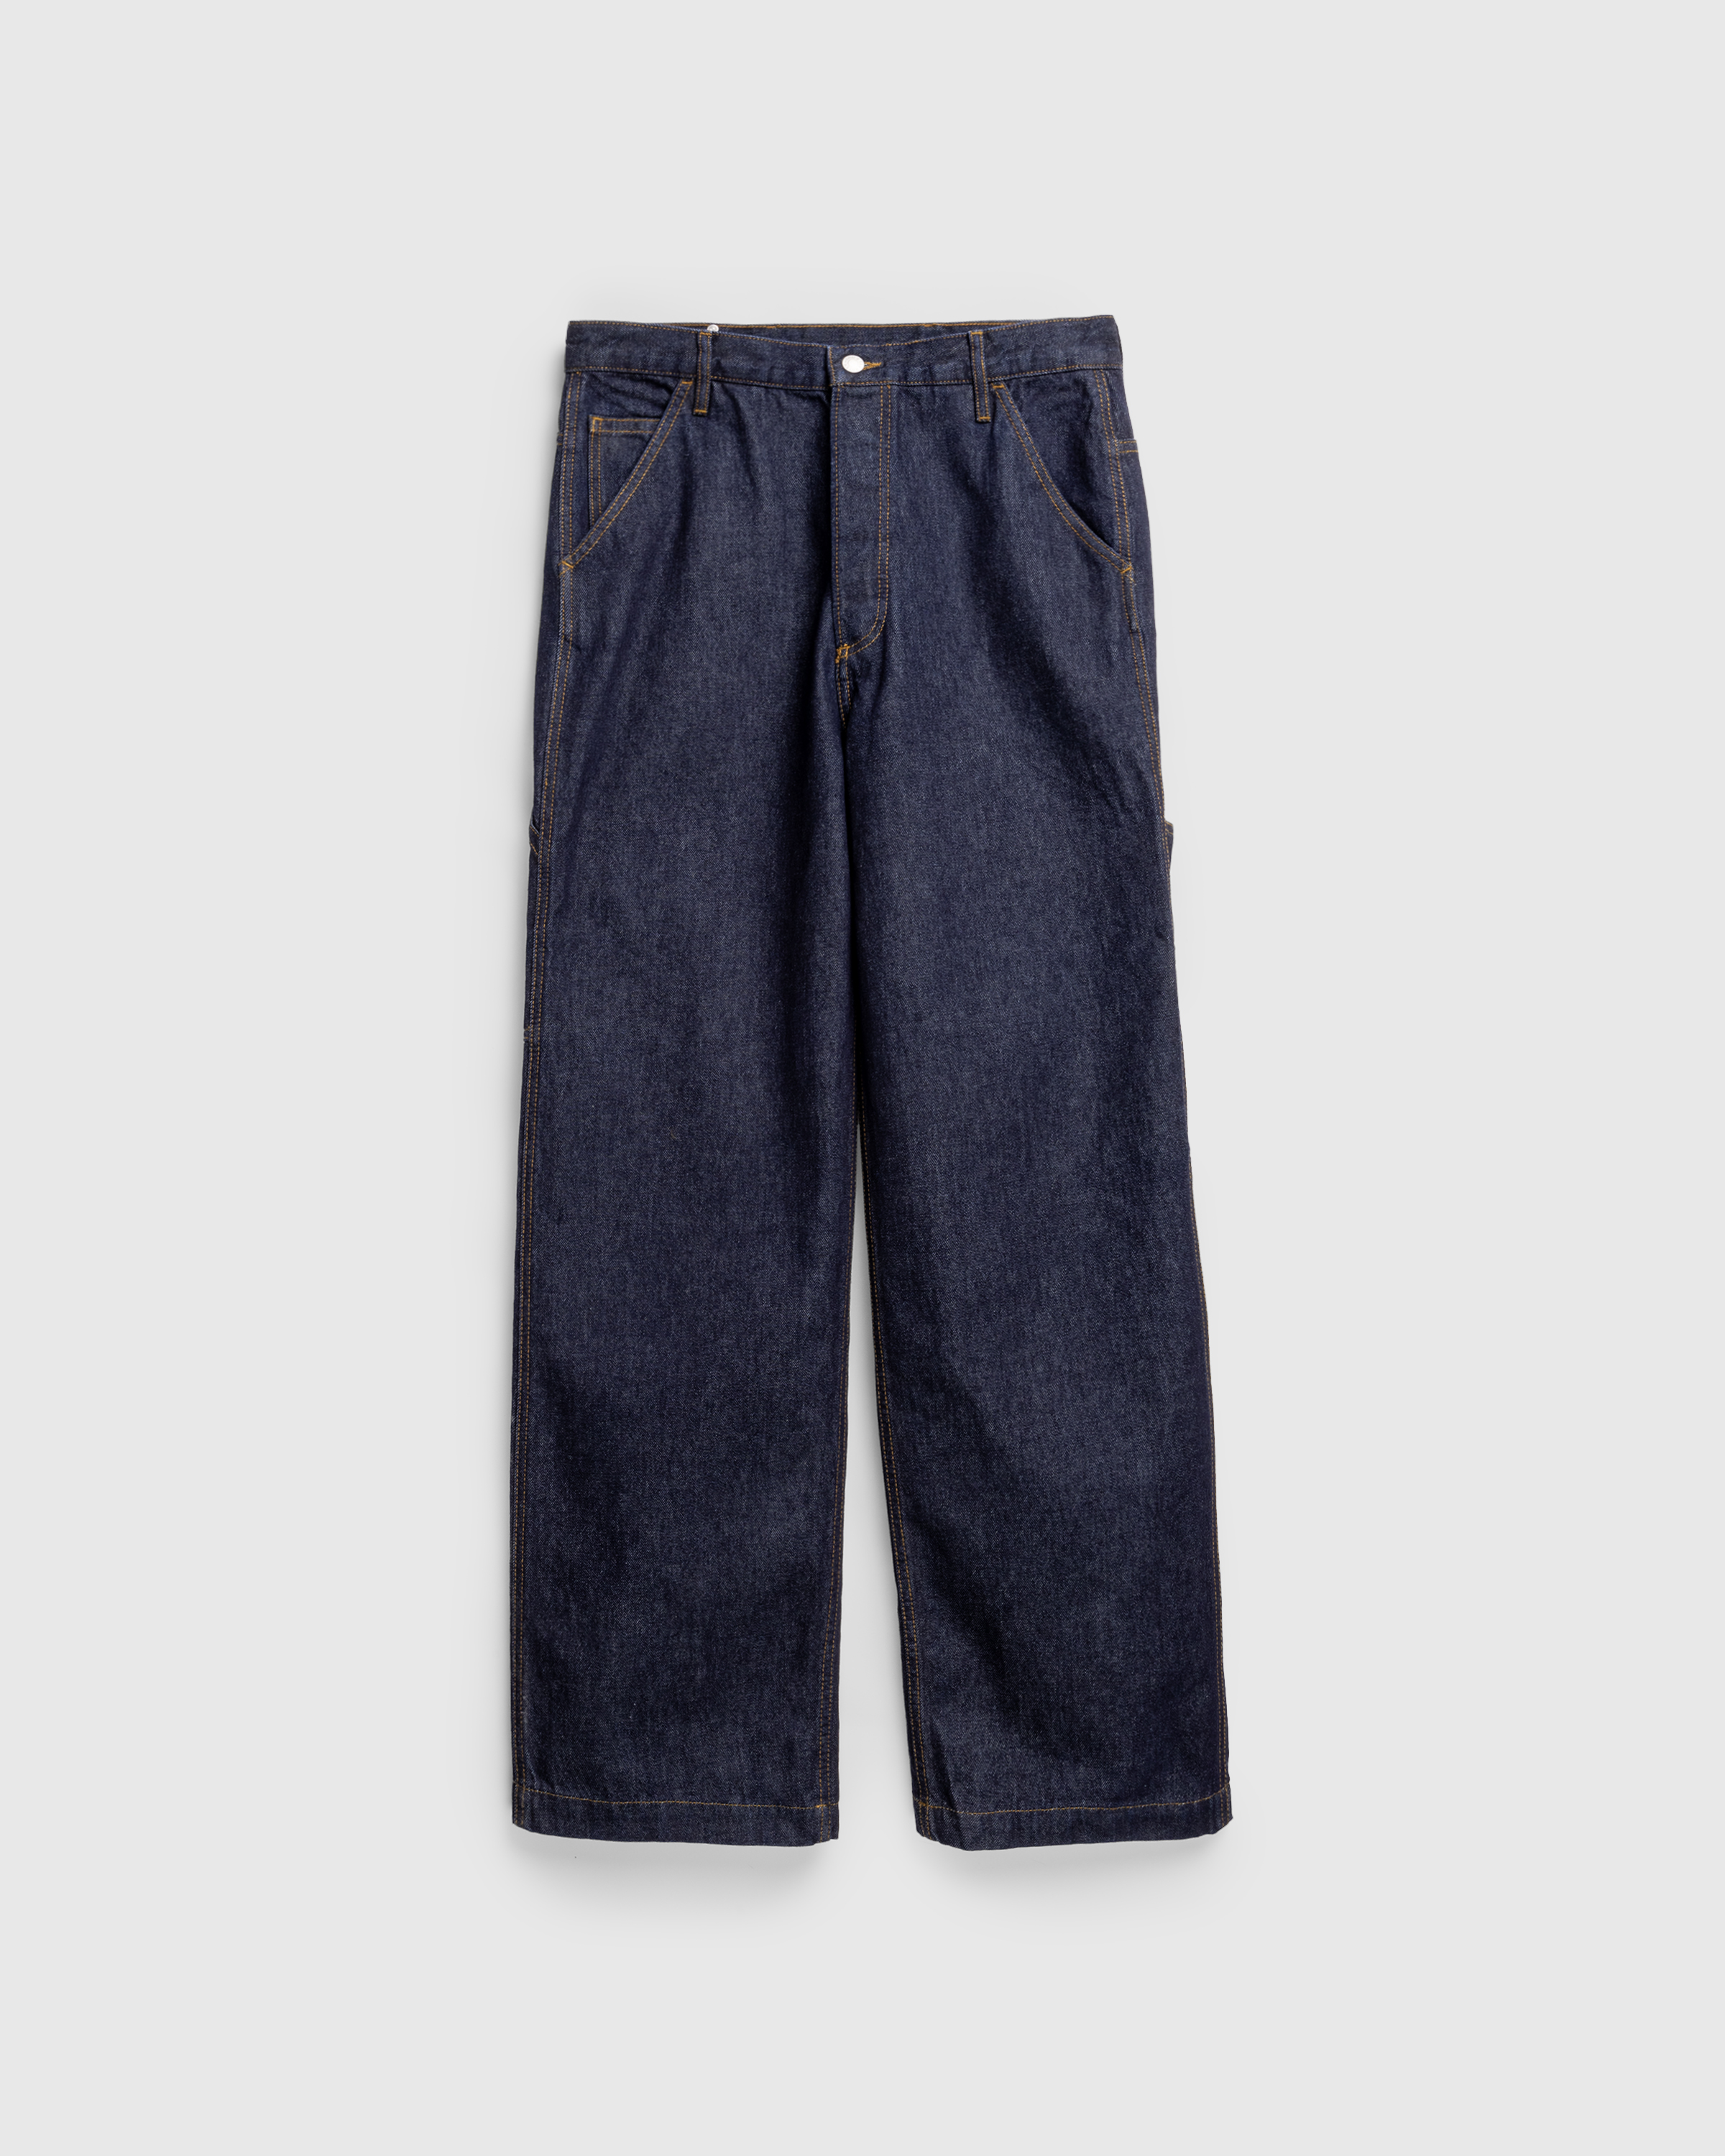 Dries van Noten – Pickerby Pants Indigo - Trousers - Blue - Image 1